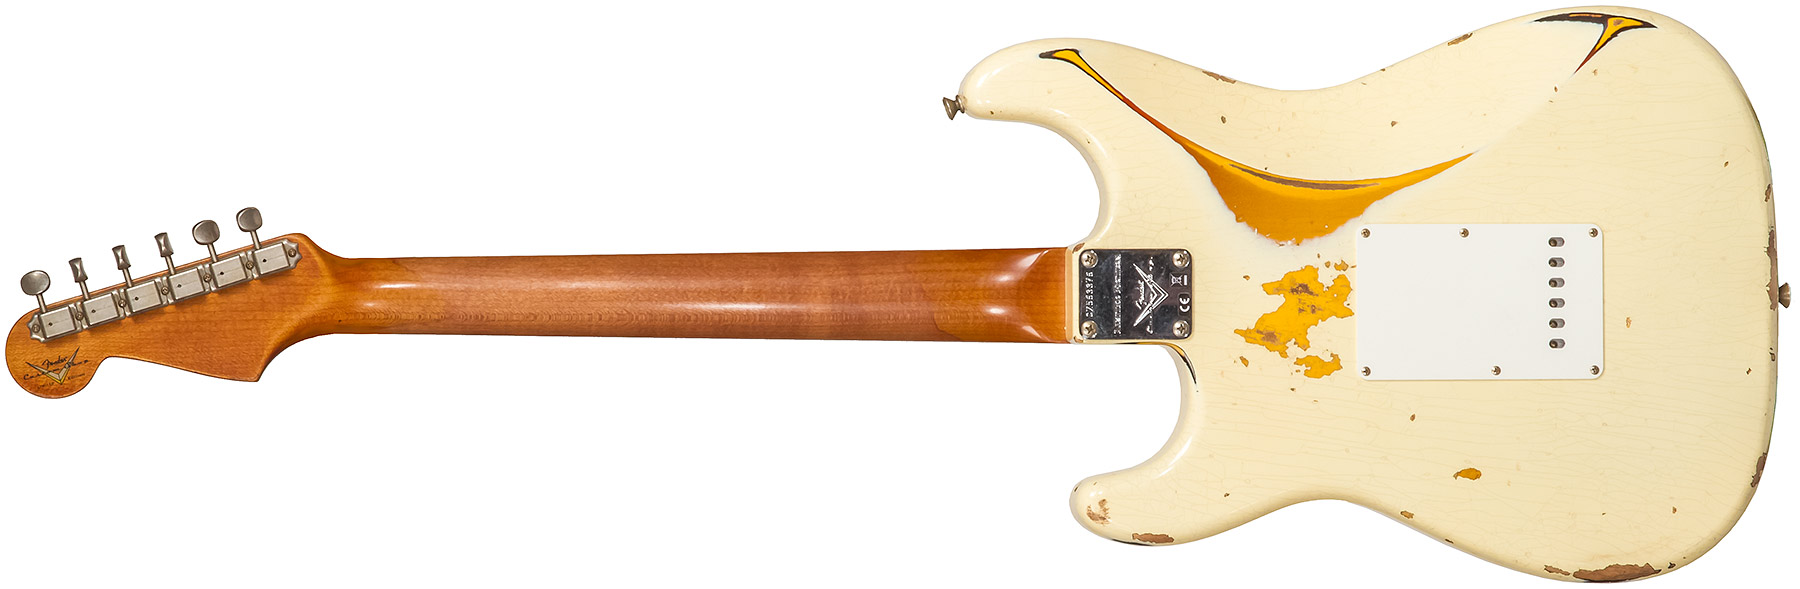 Fender Custom Shop Strat 1961 3s Trem Rw #cz563376 - Heavy Relic Vintage White/3-color Sunburst - E-Gitarre in Str-Form - Variation 1